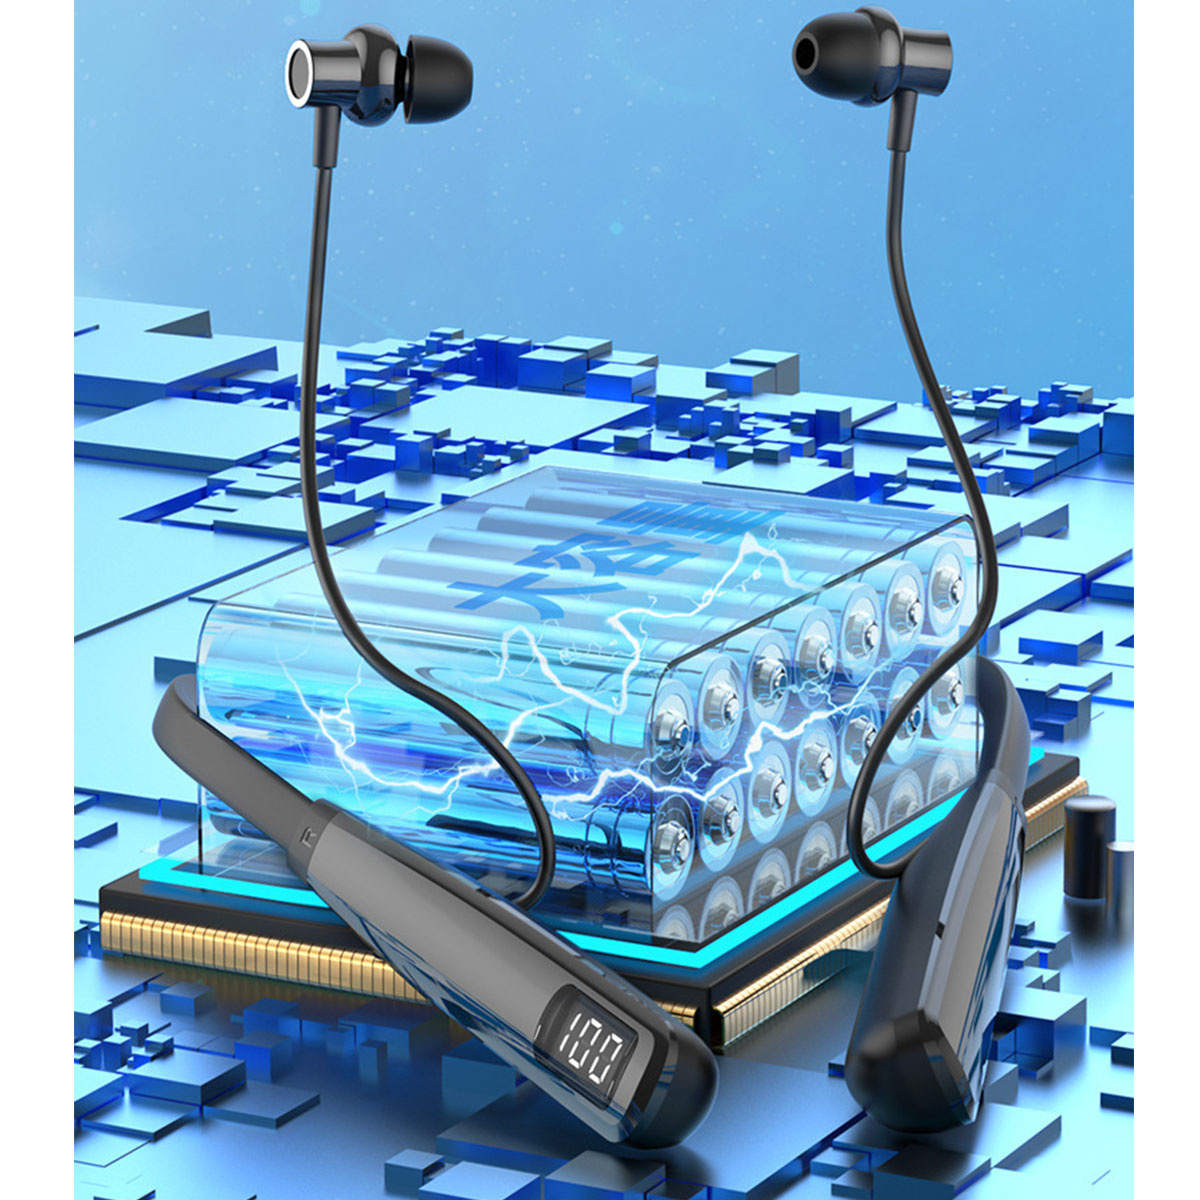 SYNTEK Bluetooth Kopfhörer schwarz Hals drahtlose In-ear Kopfhörer Schwarz Kopfhörer, hängende Bluetooth Bluetooth